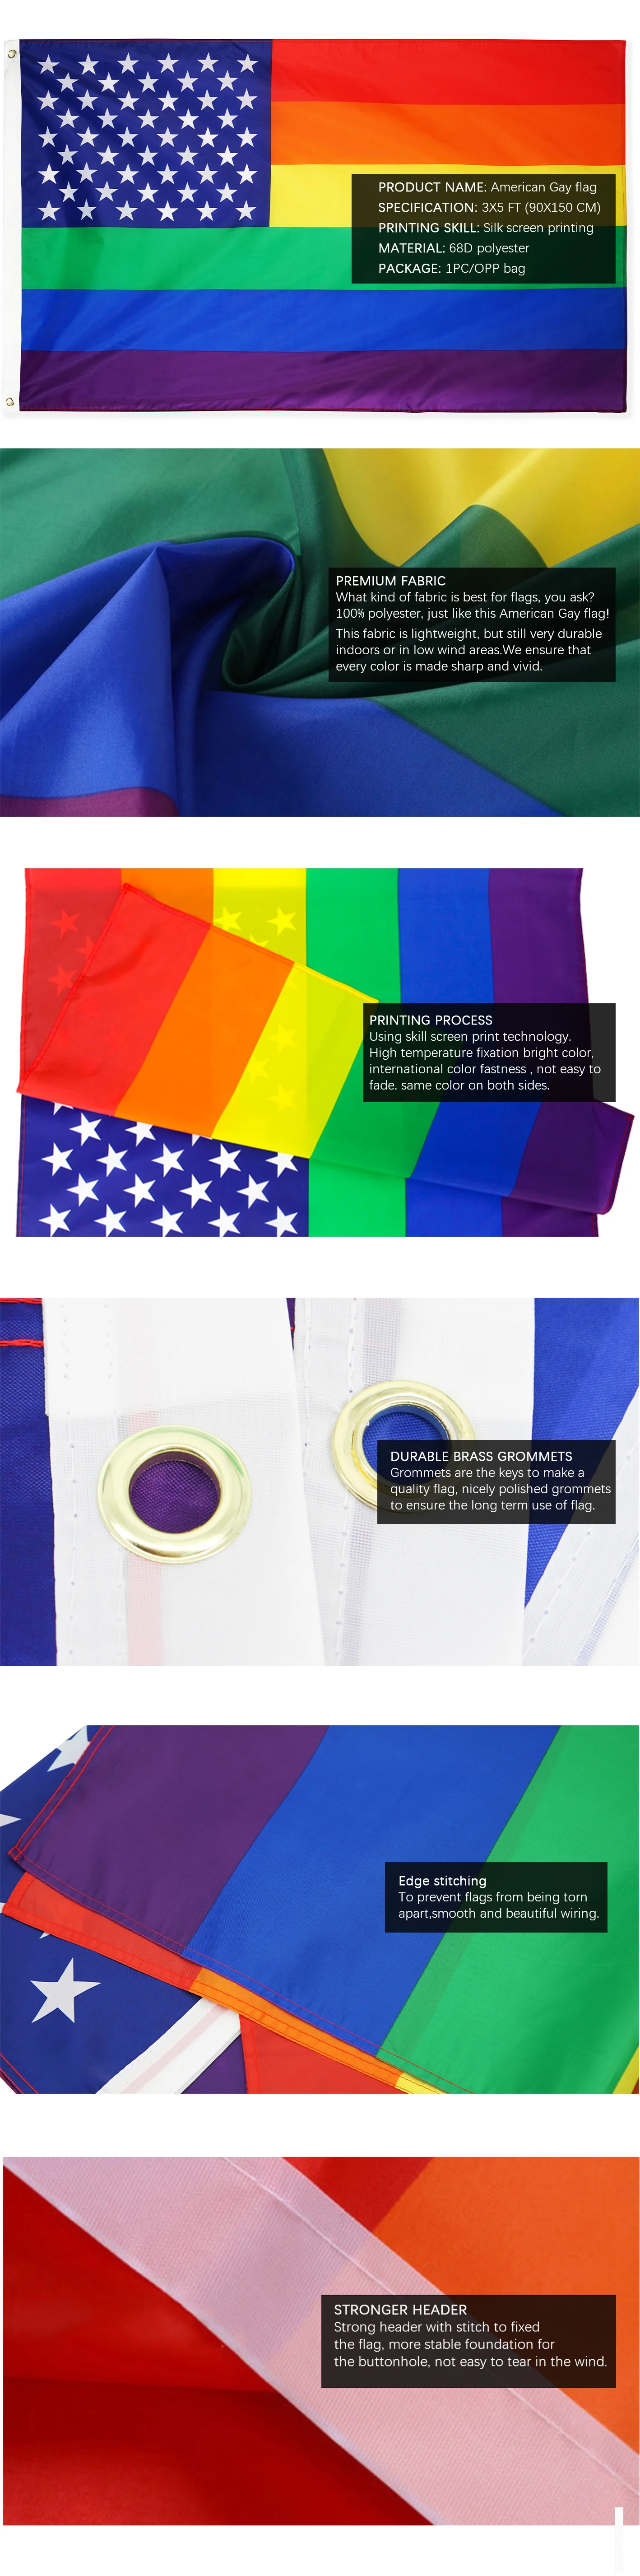 Make America Gay Again Rainbow Gay Pride Flag Banner 3x5 Feet US Shipper 